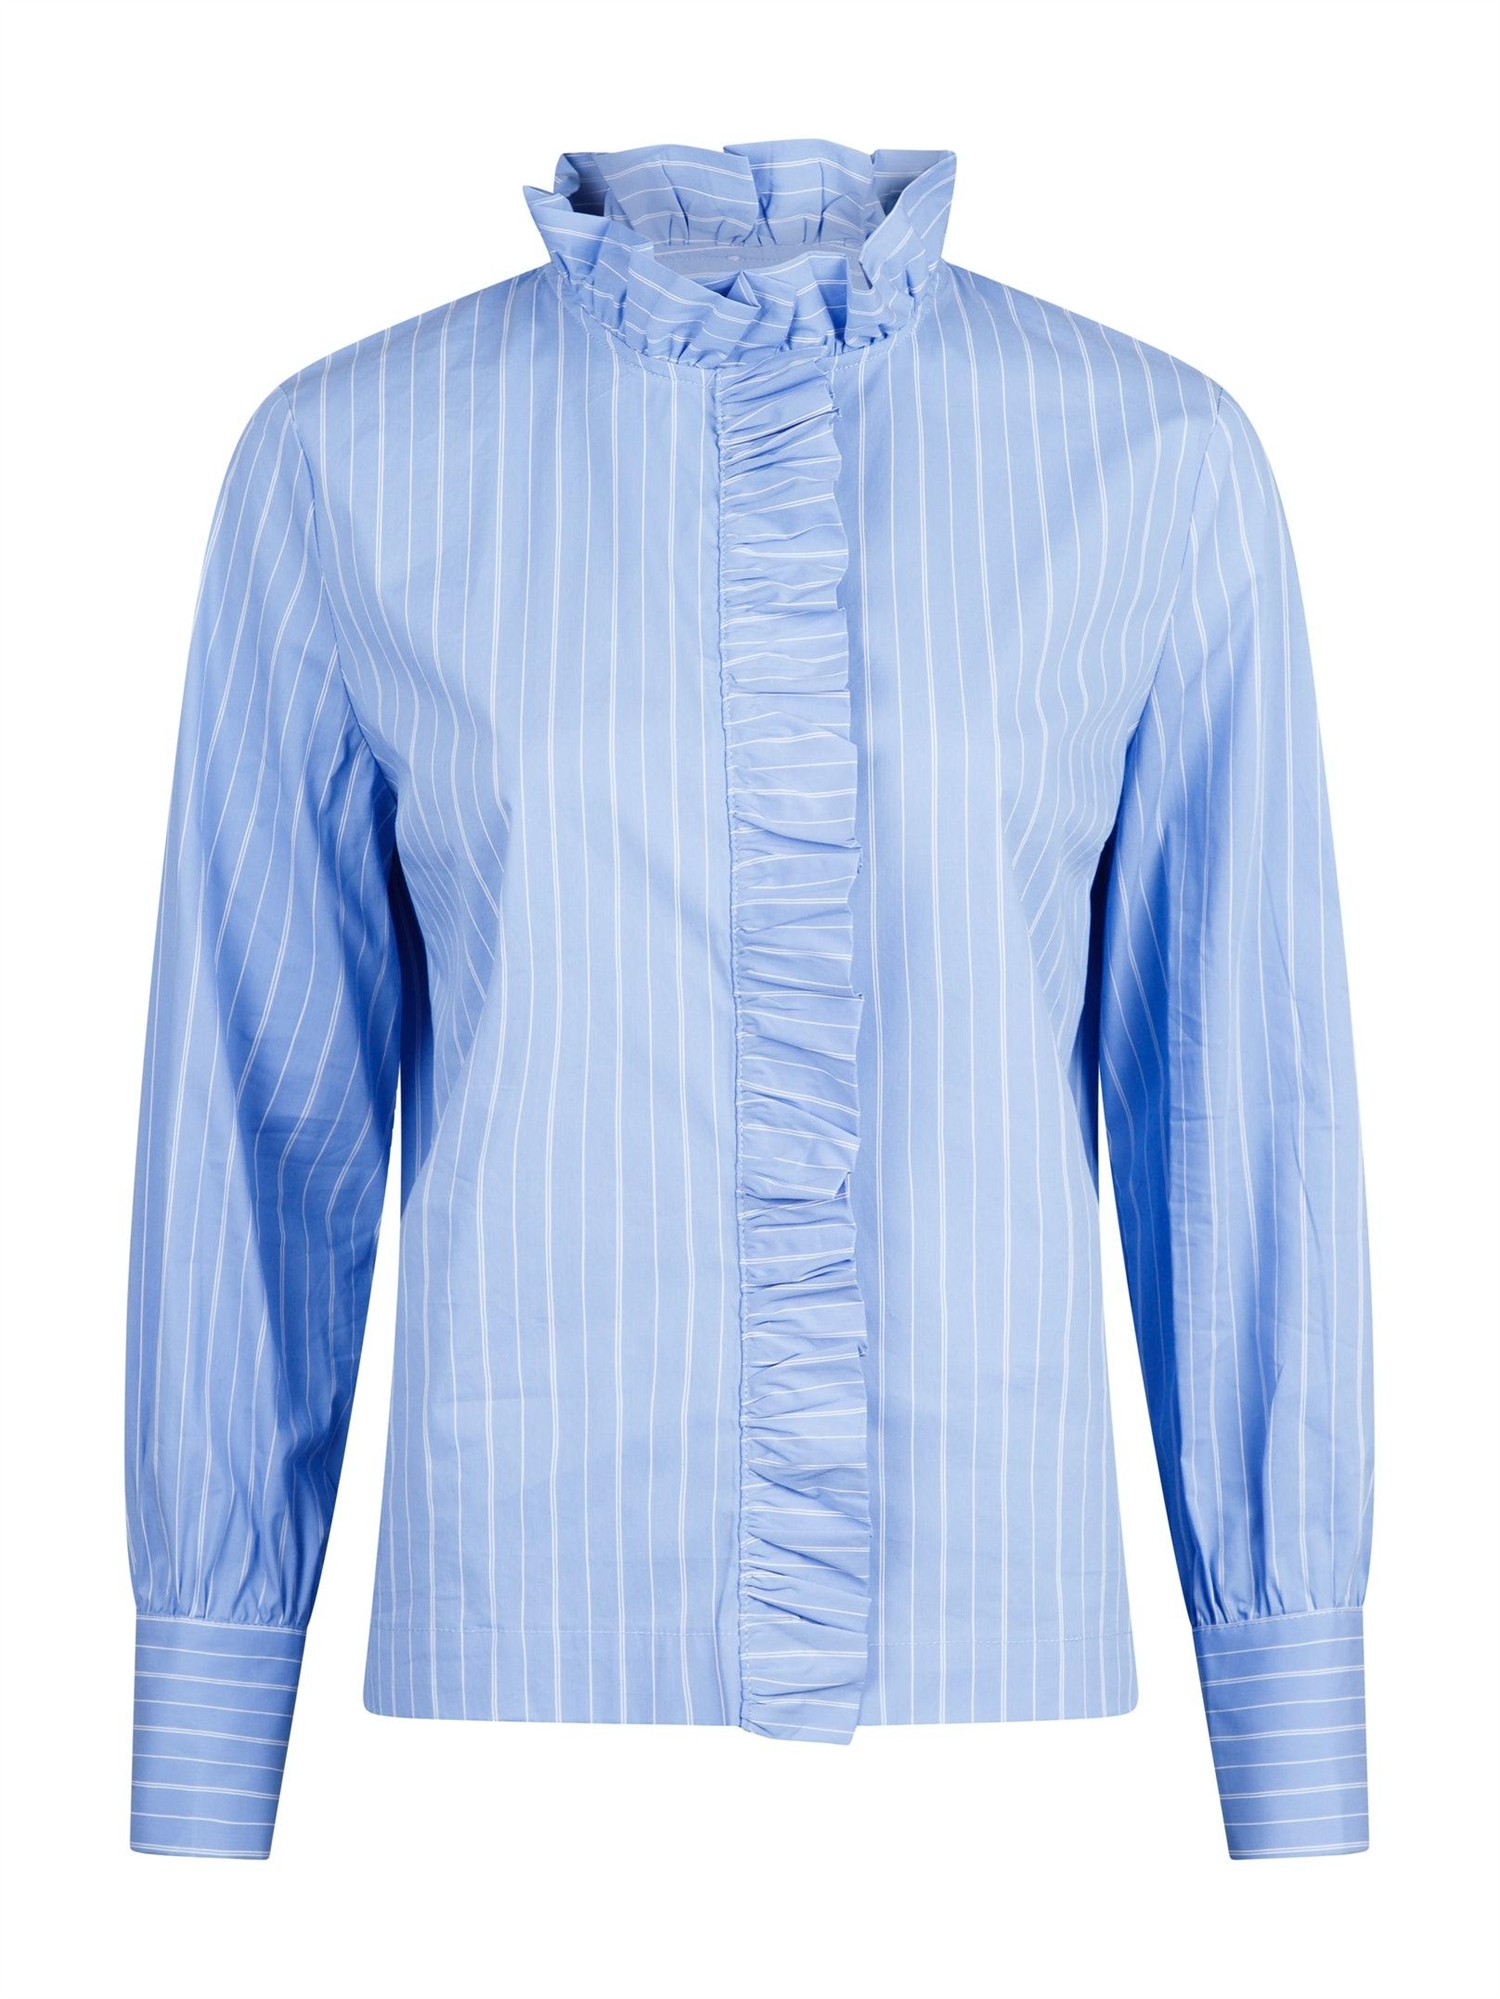 Kig forbi Centimeter indlysende Baxter Stripe Skjorte Light Blue - Shop Neo Noir Her